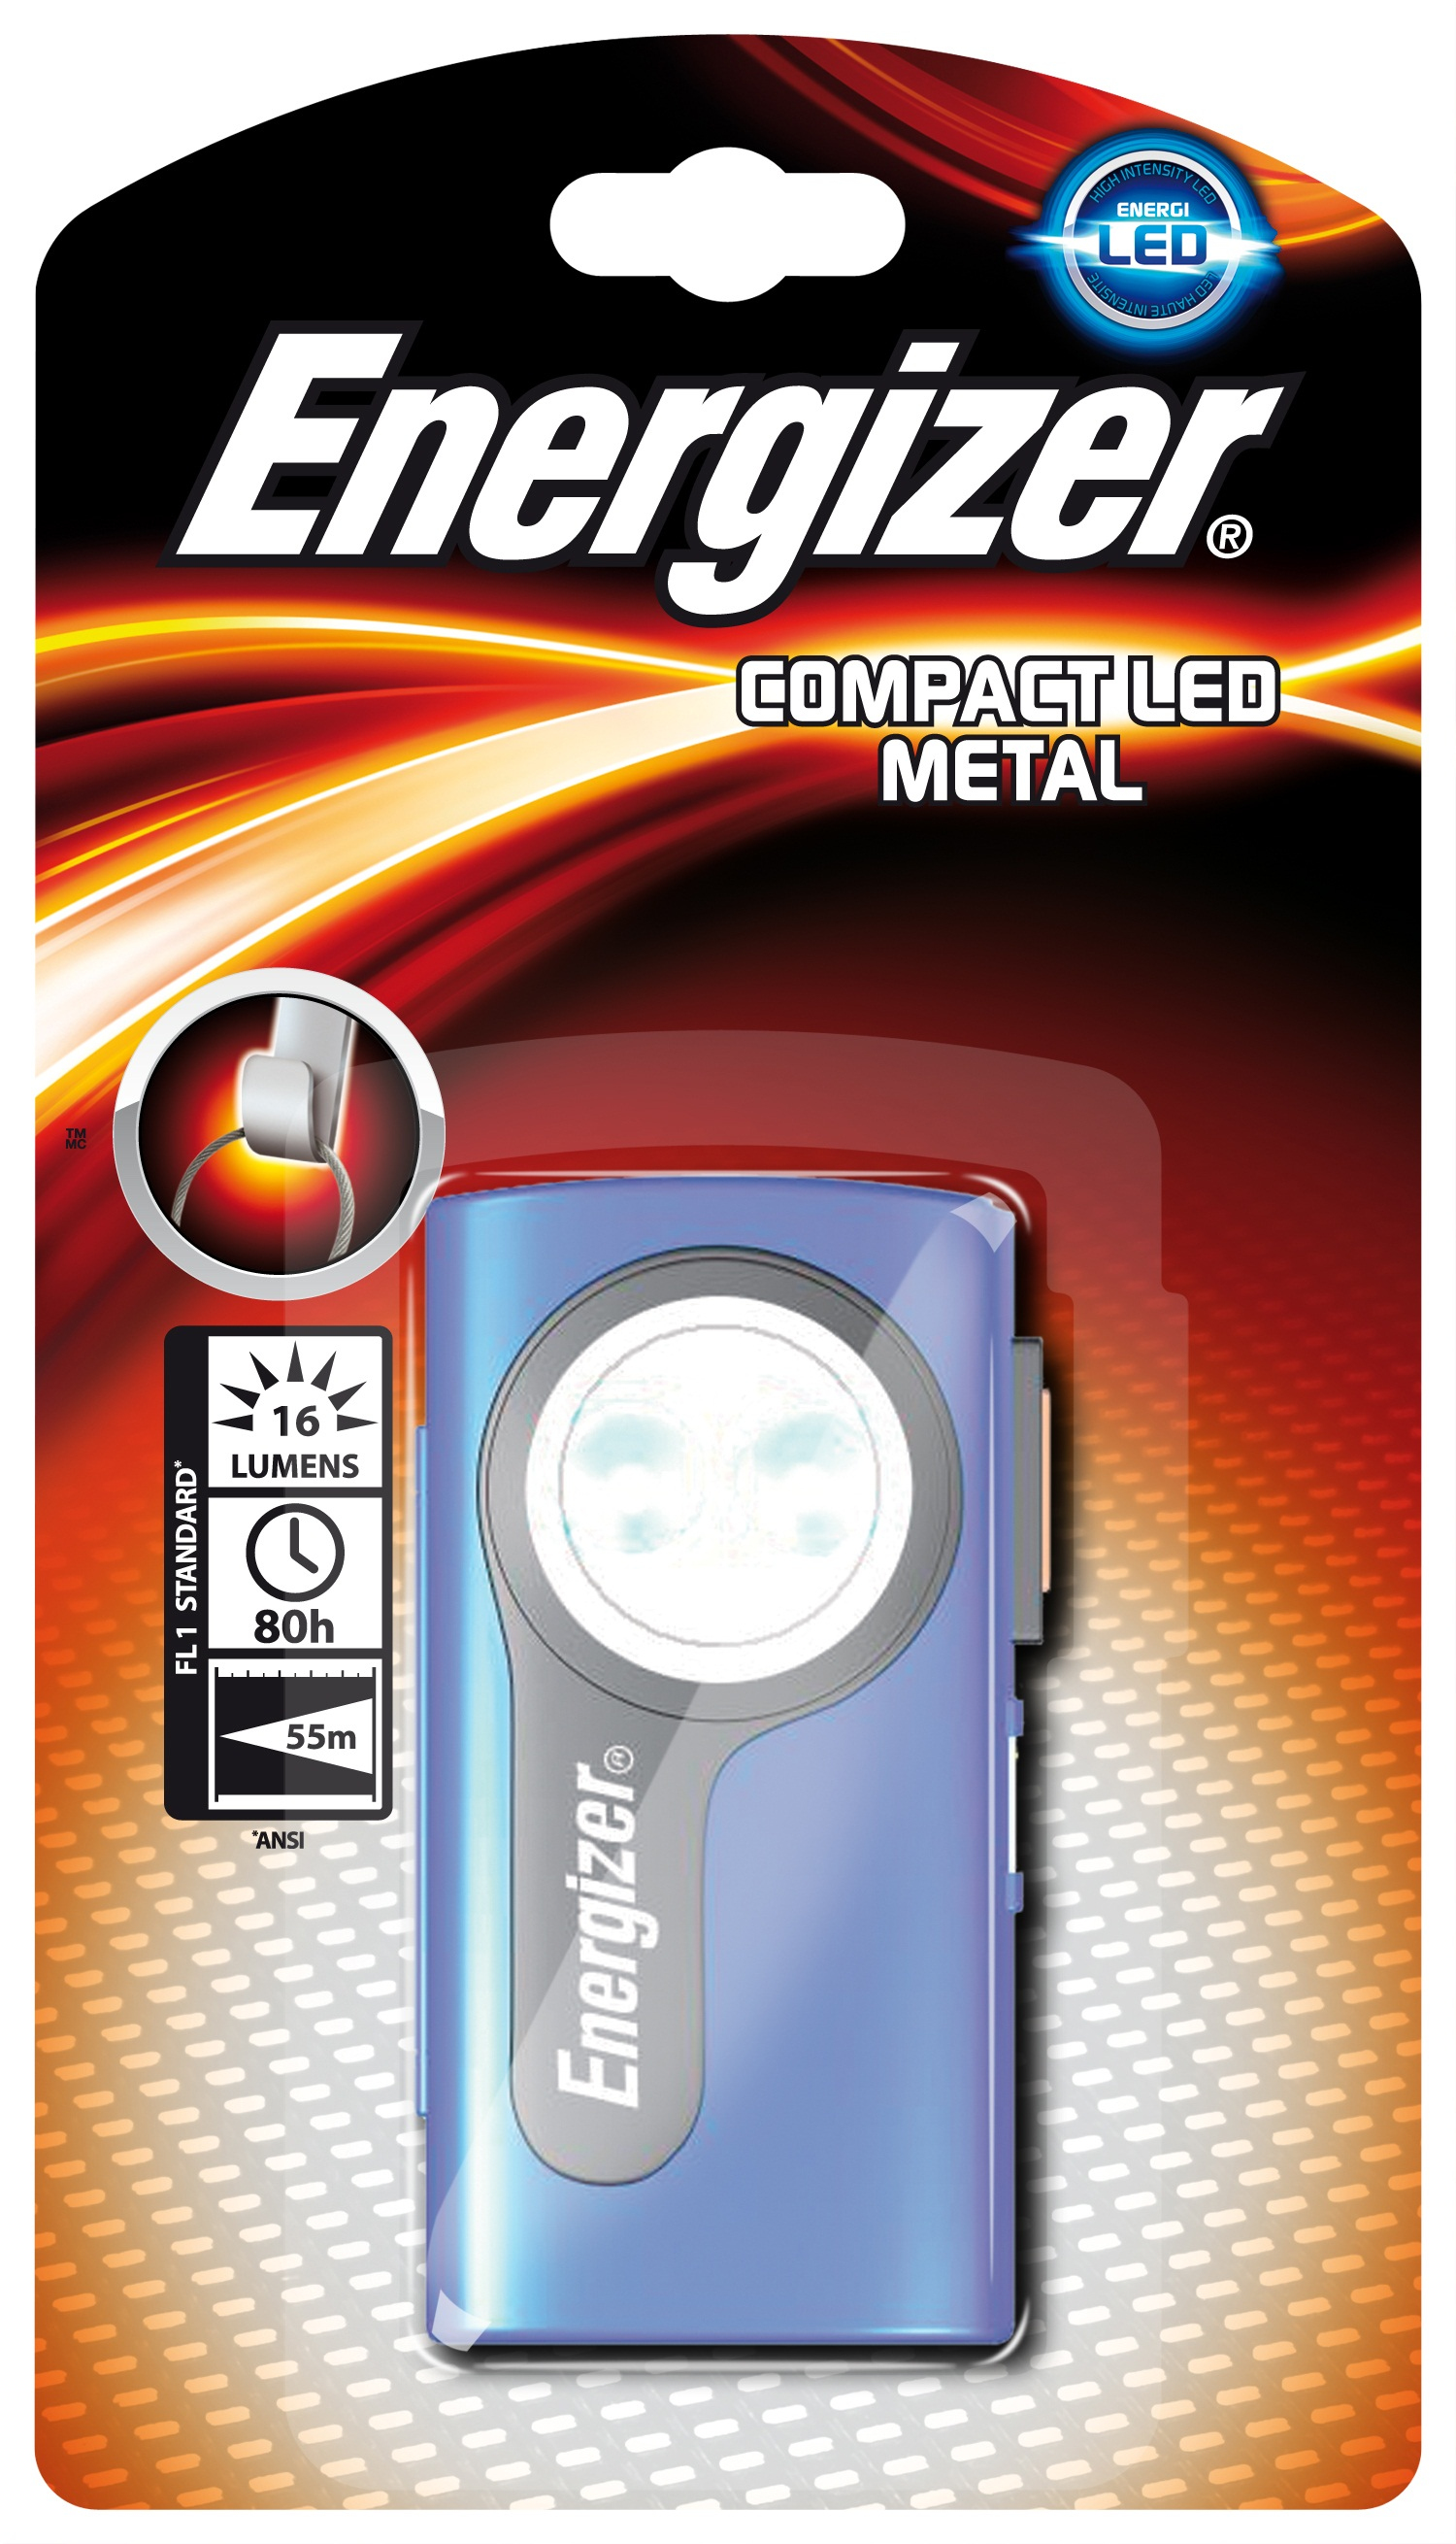 Energizer Compact LED Metall ohne Batt.